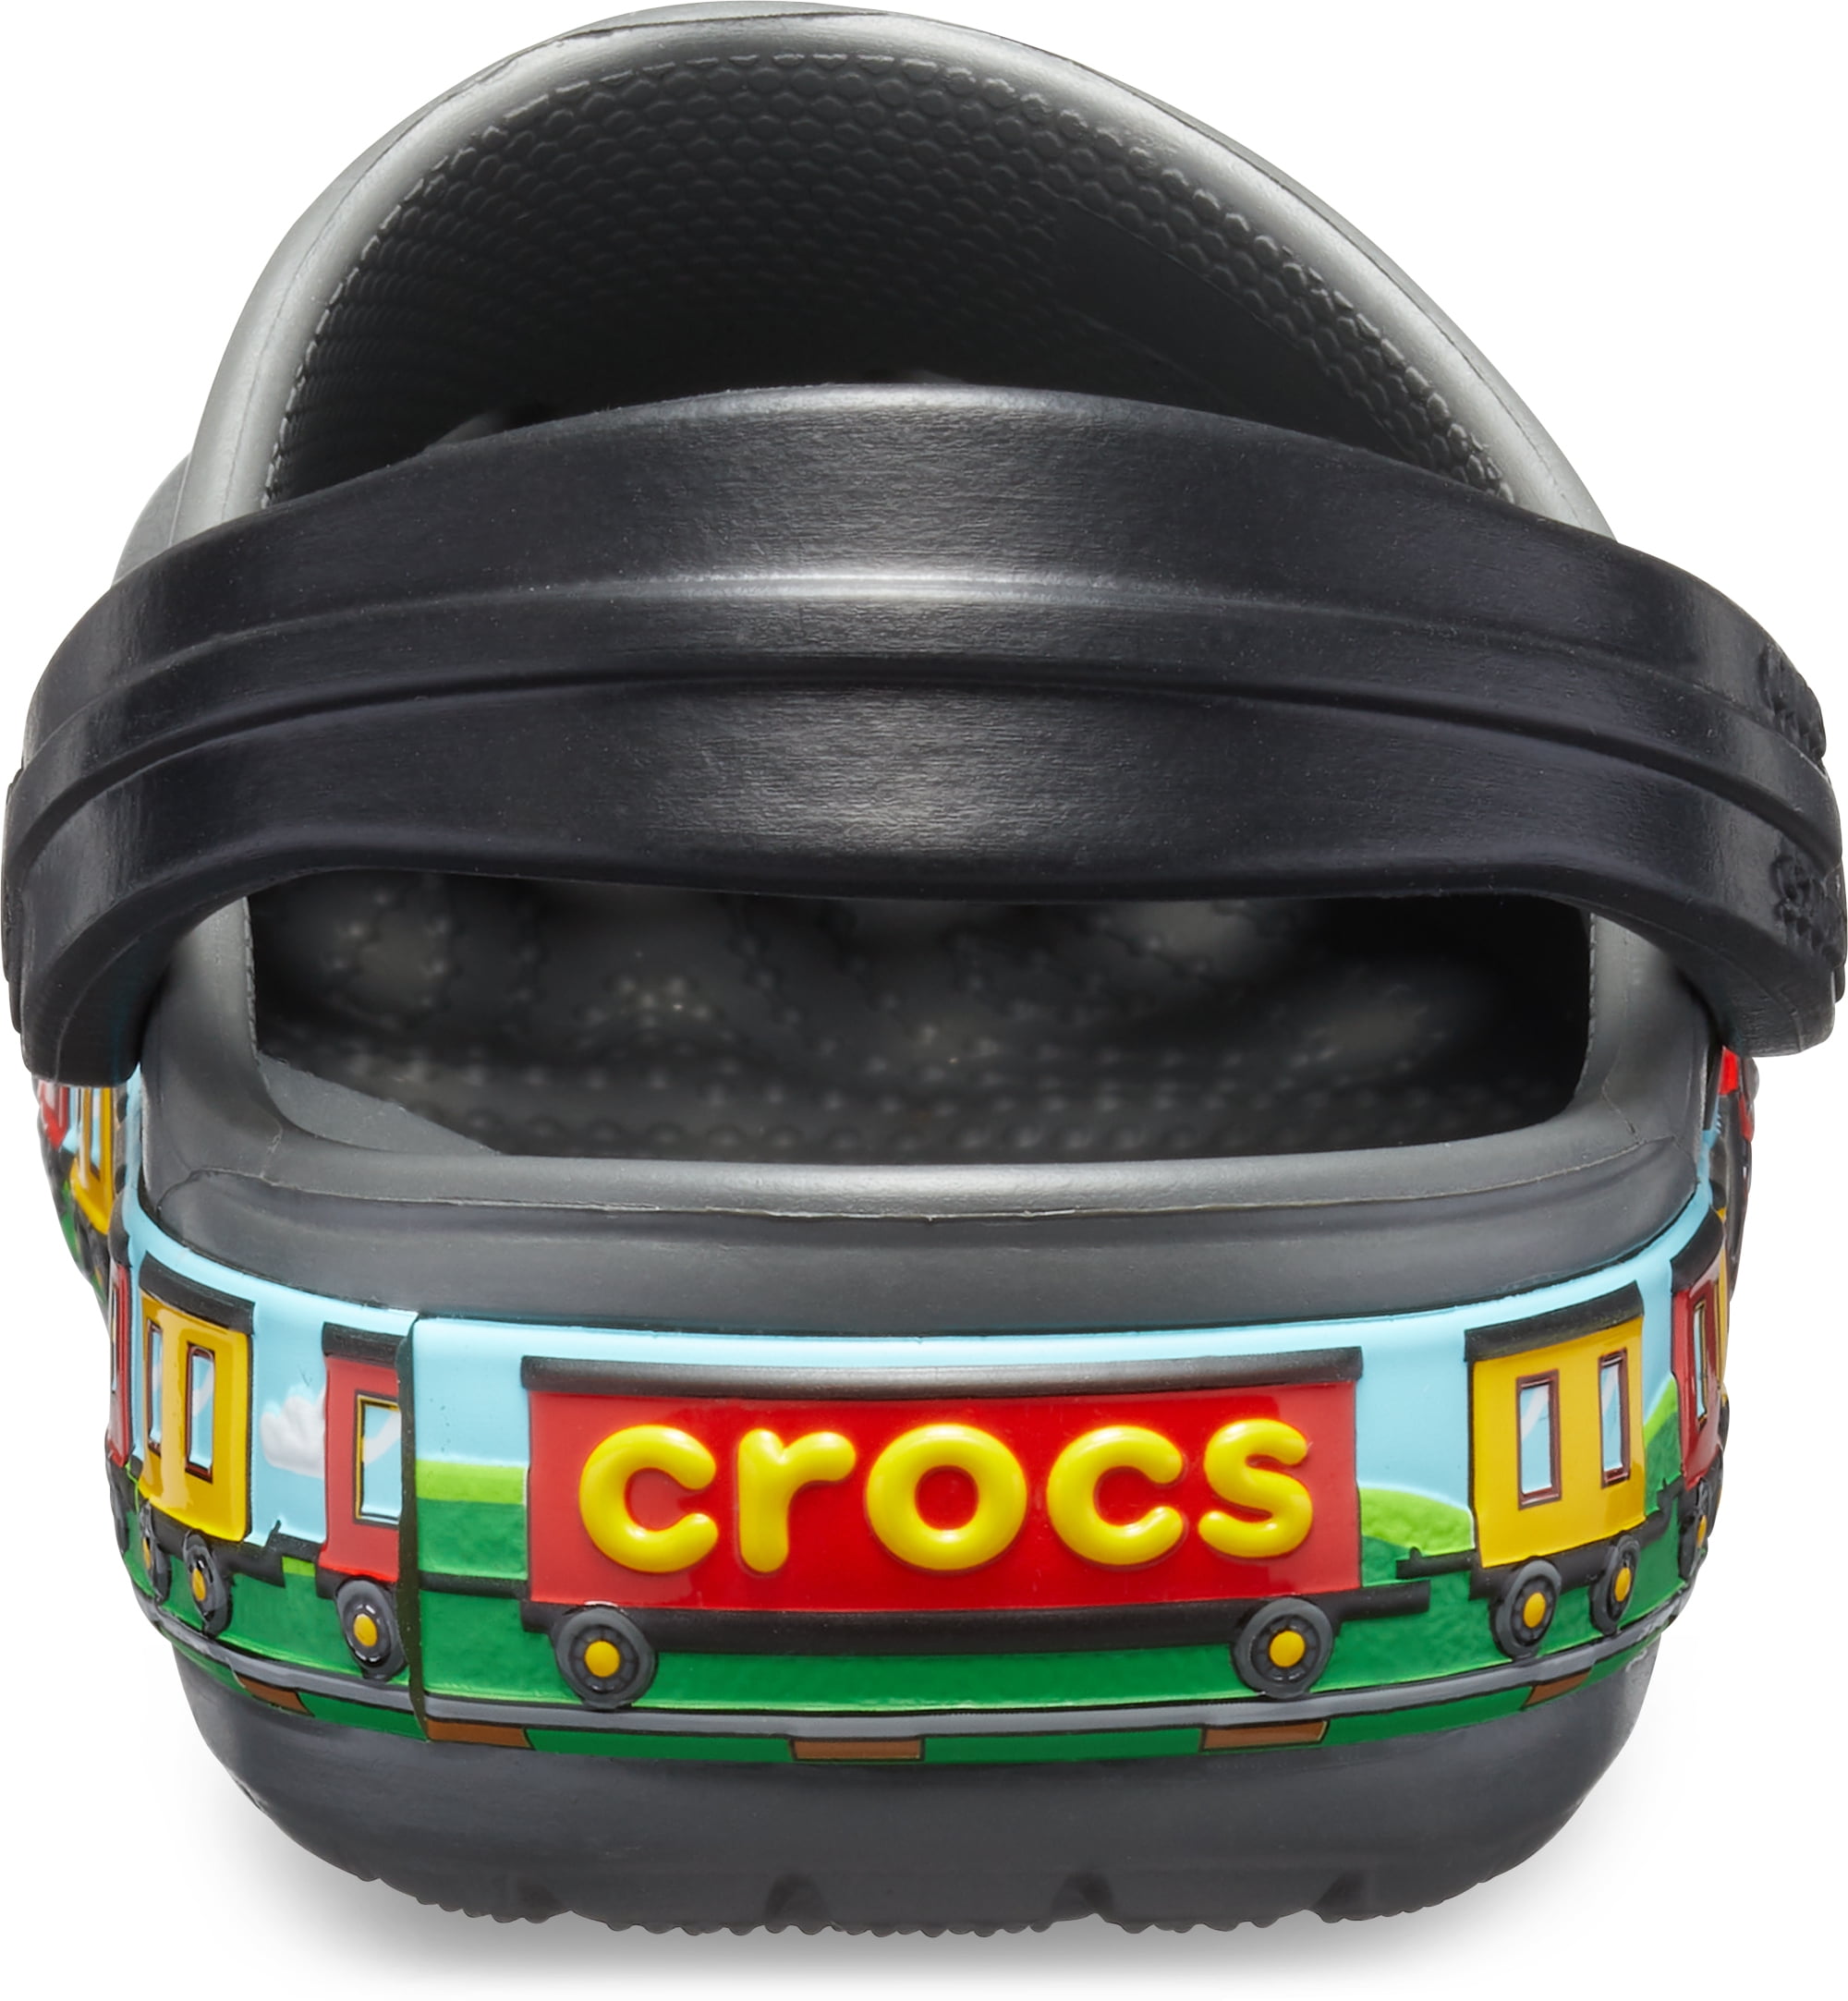 Crocs Kids Boys and Girls Train Band Clog